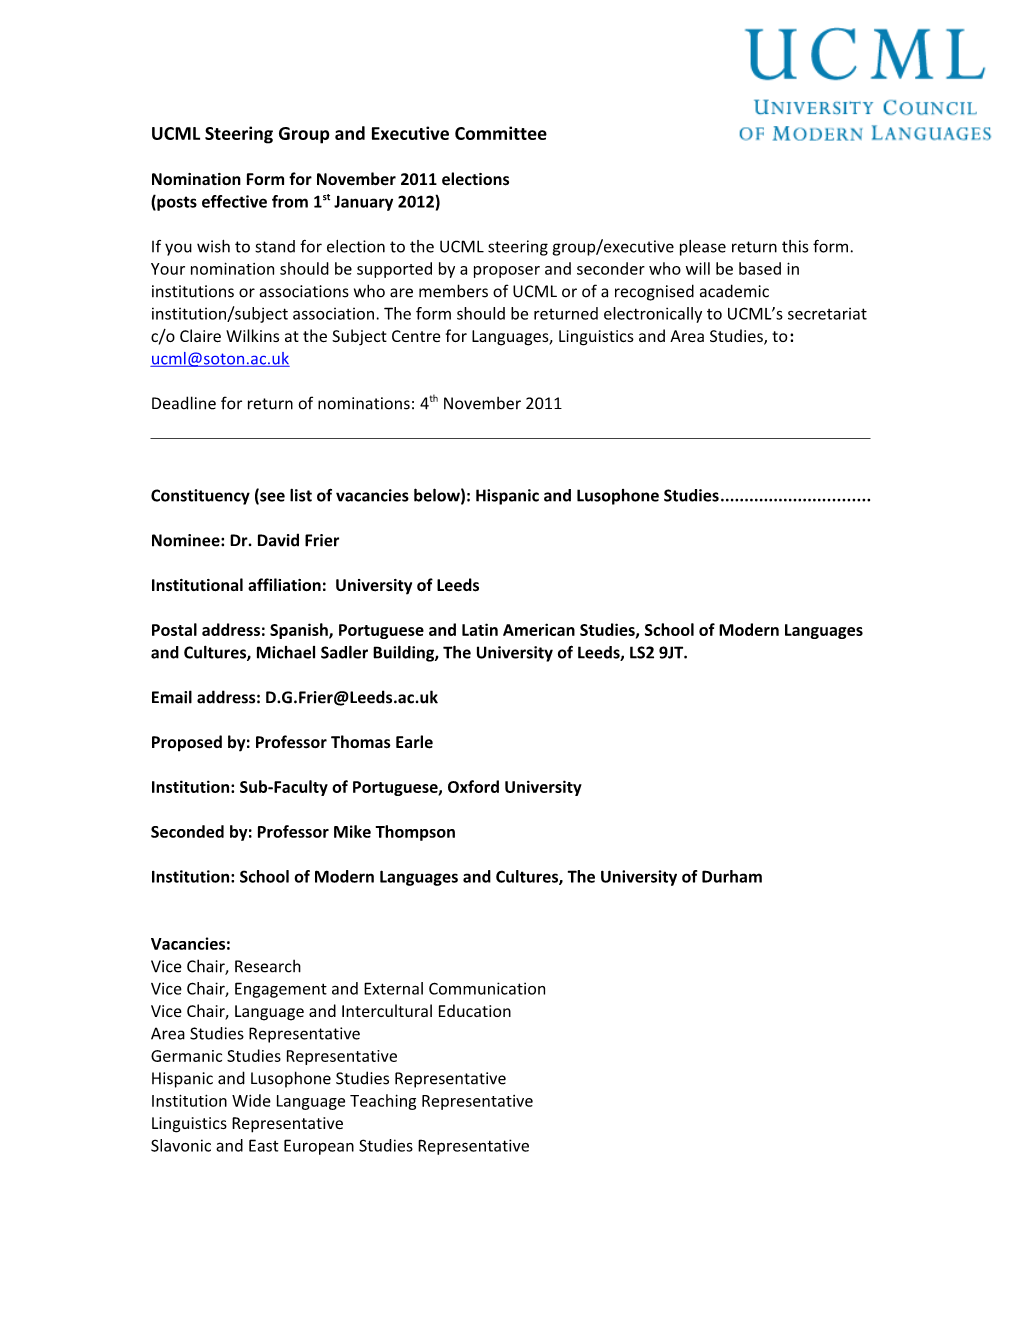 Nomination Form for November 2011 Elections